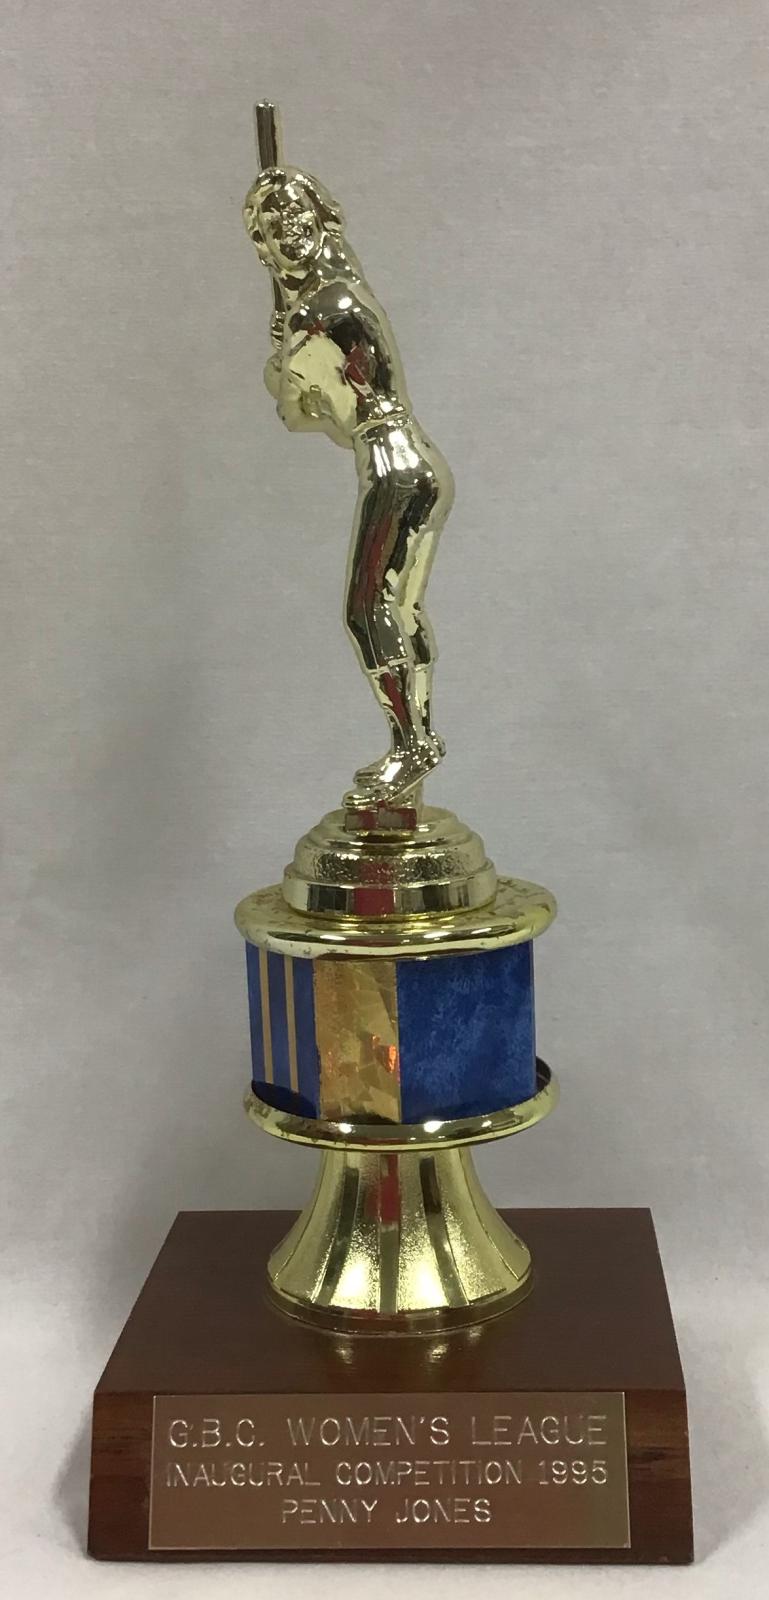 1995 Gosnells Baseball Club Women's League trophy